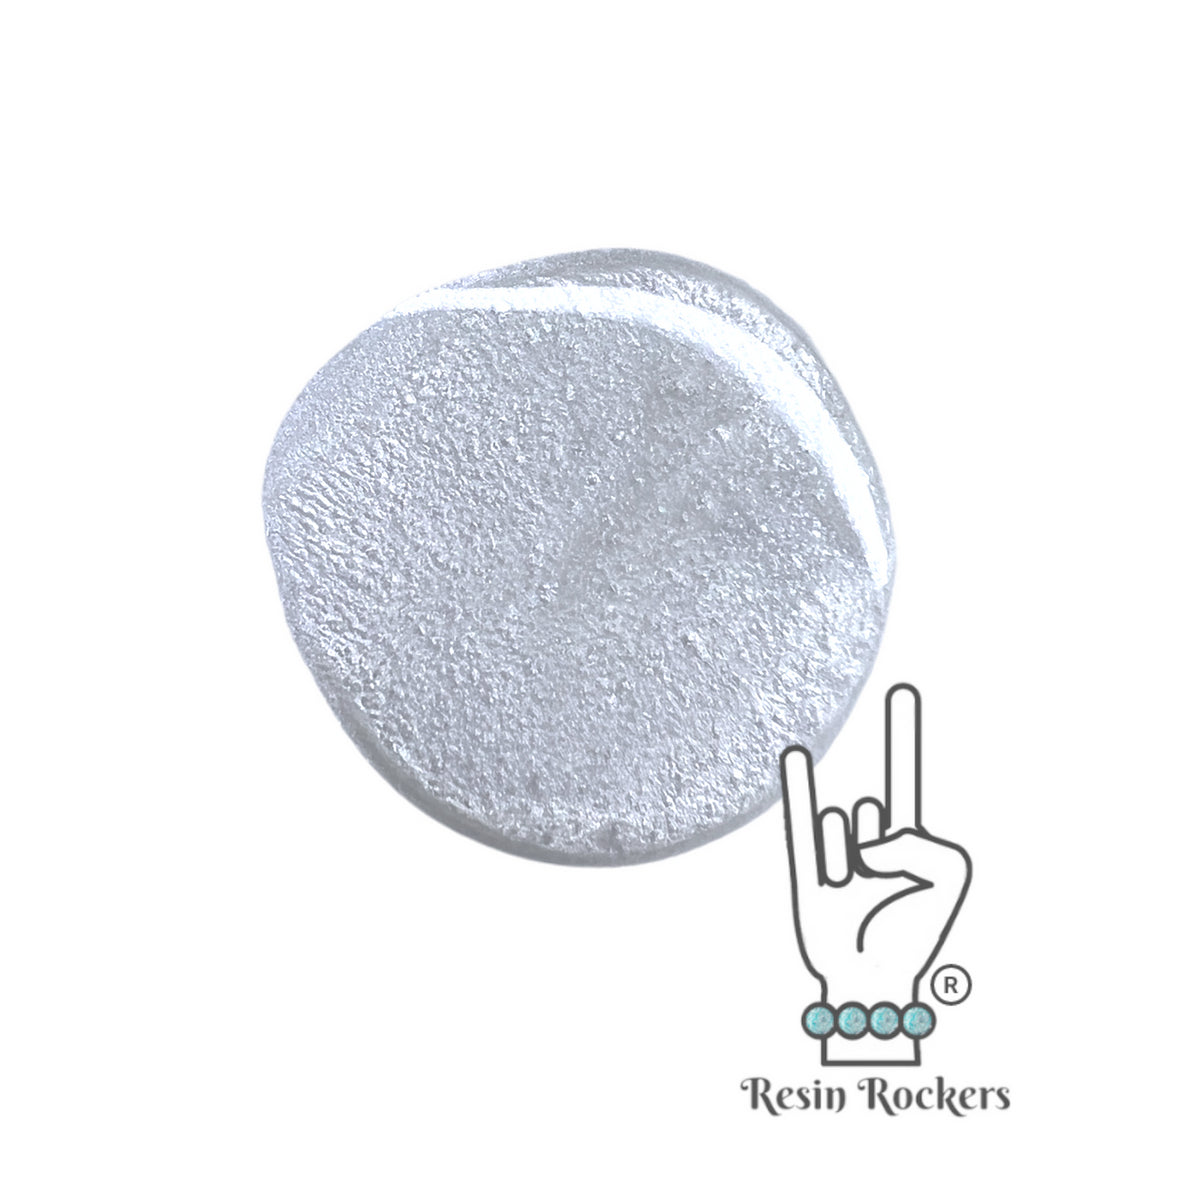 Resin Rockers Pro Pearl Premium Mica Pigment Powder Alive Pearl